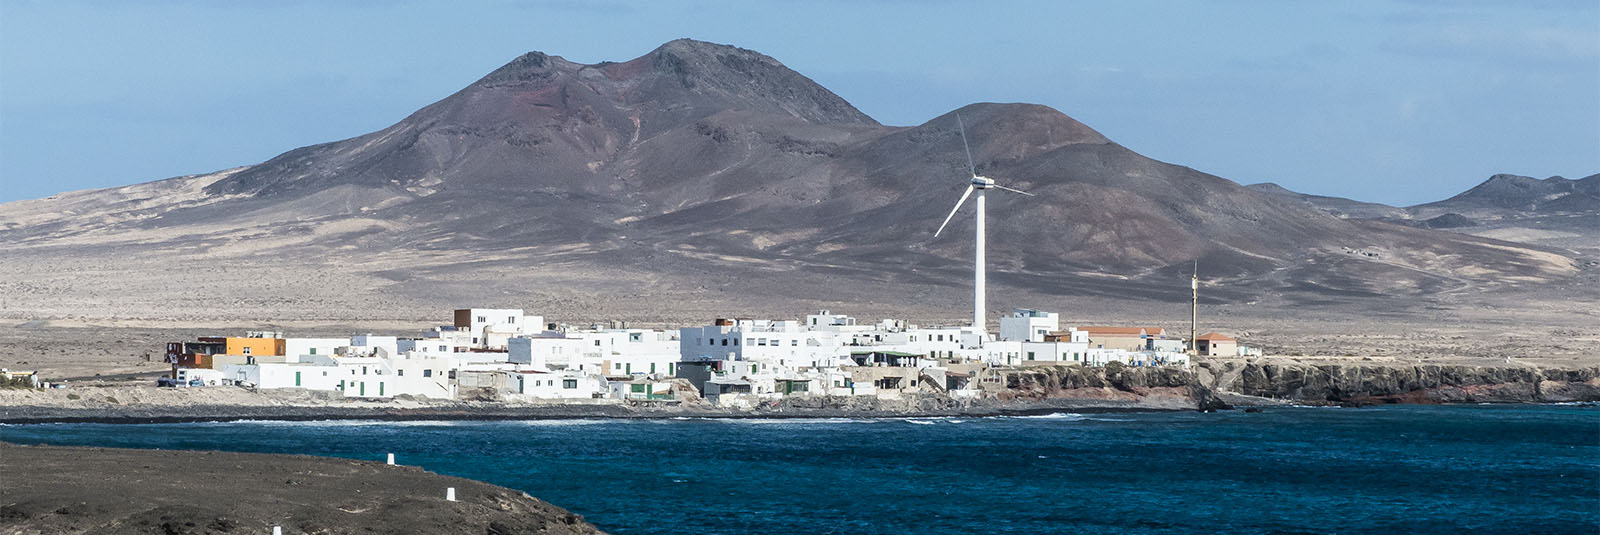 Gastronomie Fuerteventura: Puerto de la Cruz